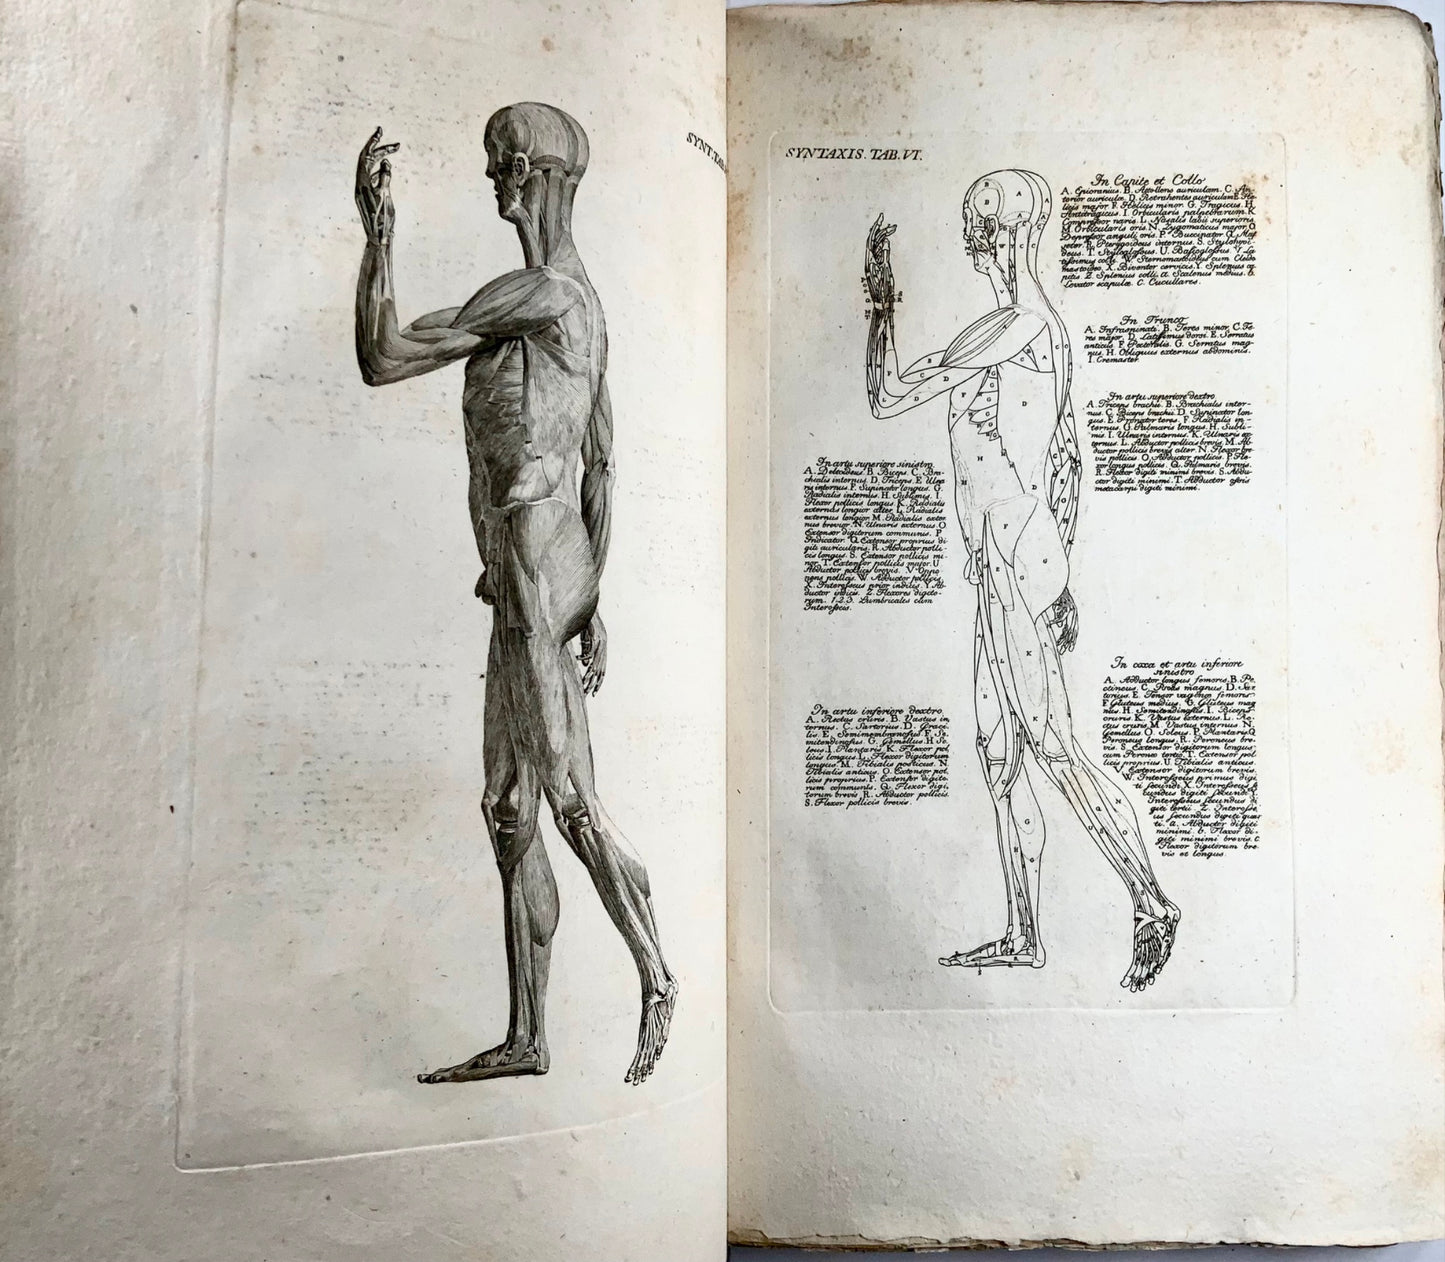 1819 J. Barth, Anfangsgründe der Muskellehre, folio, 61 copper engravings, medicine, book, anatomy